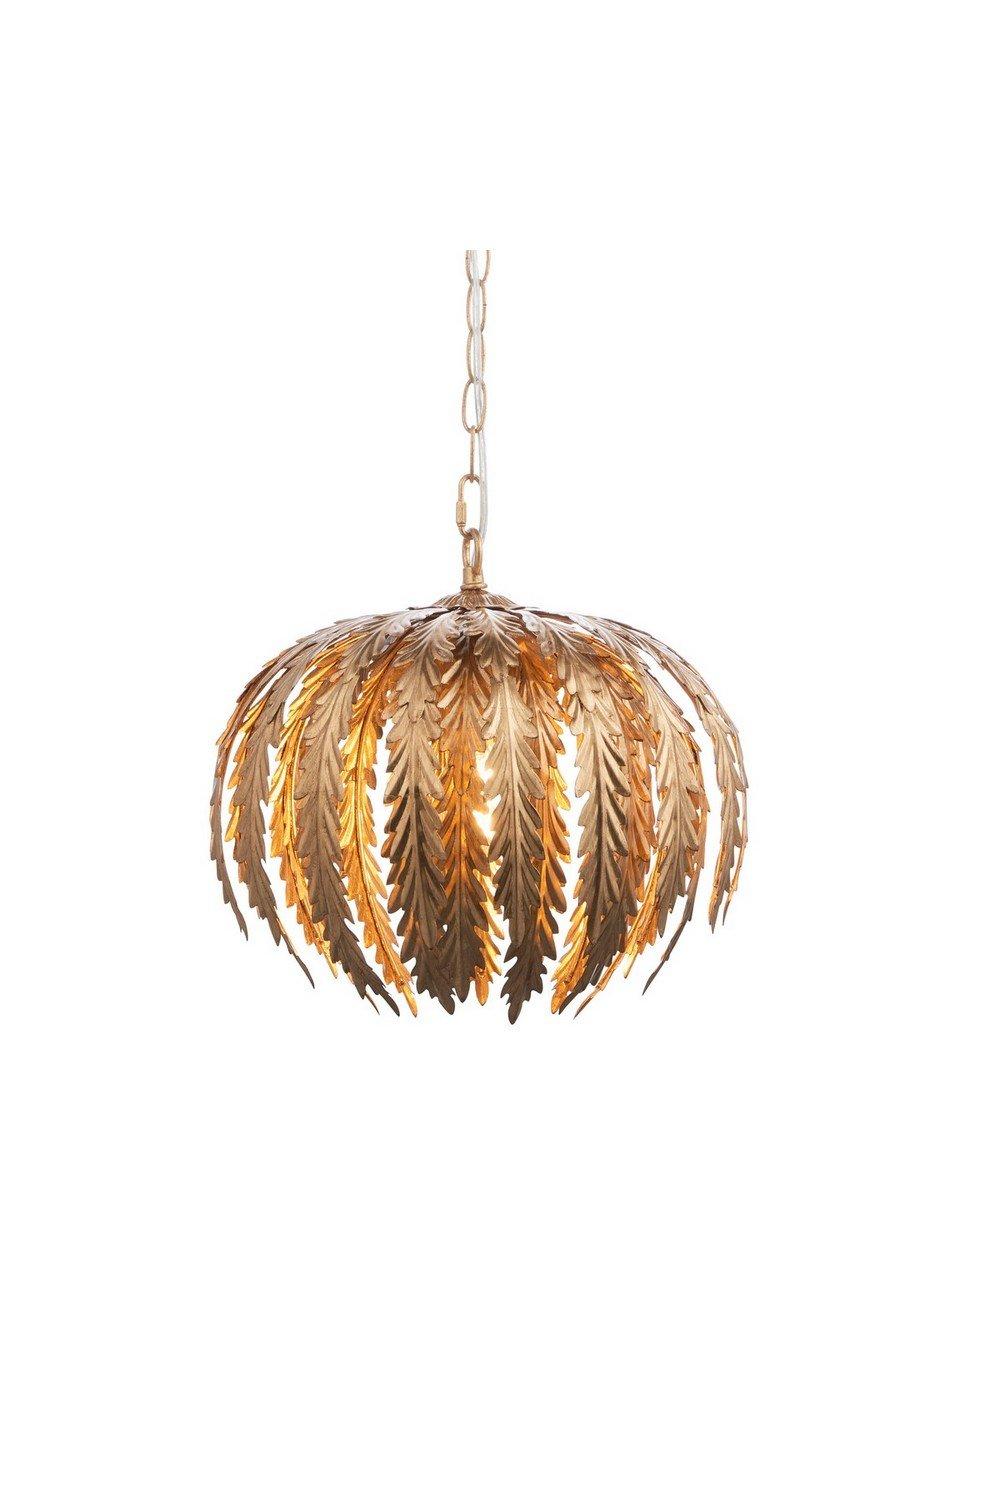 Delphine Decorative Gold Layered Leaf Ceiling Pendant Light